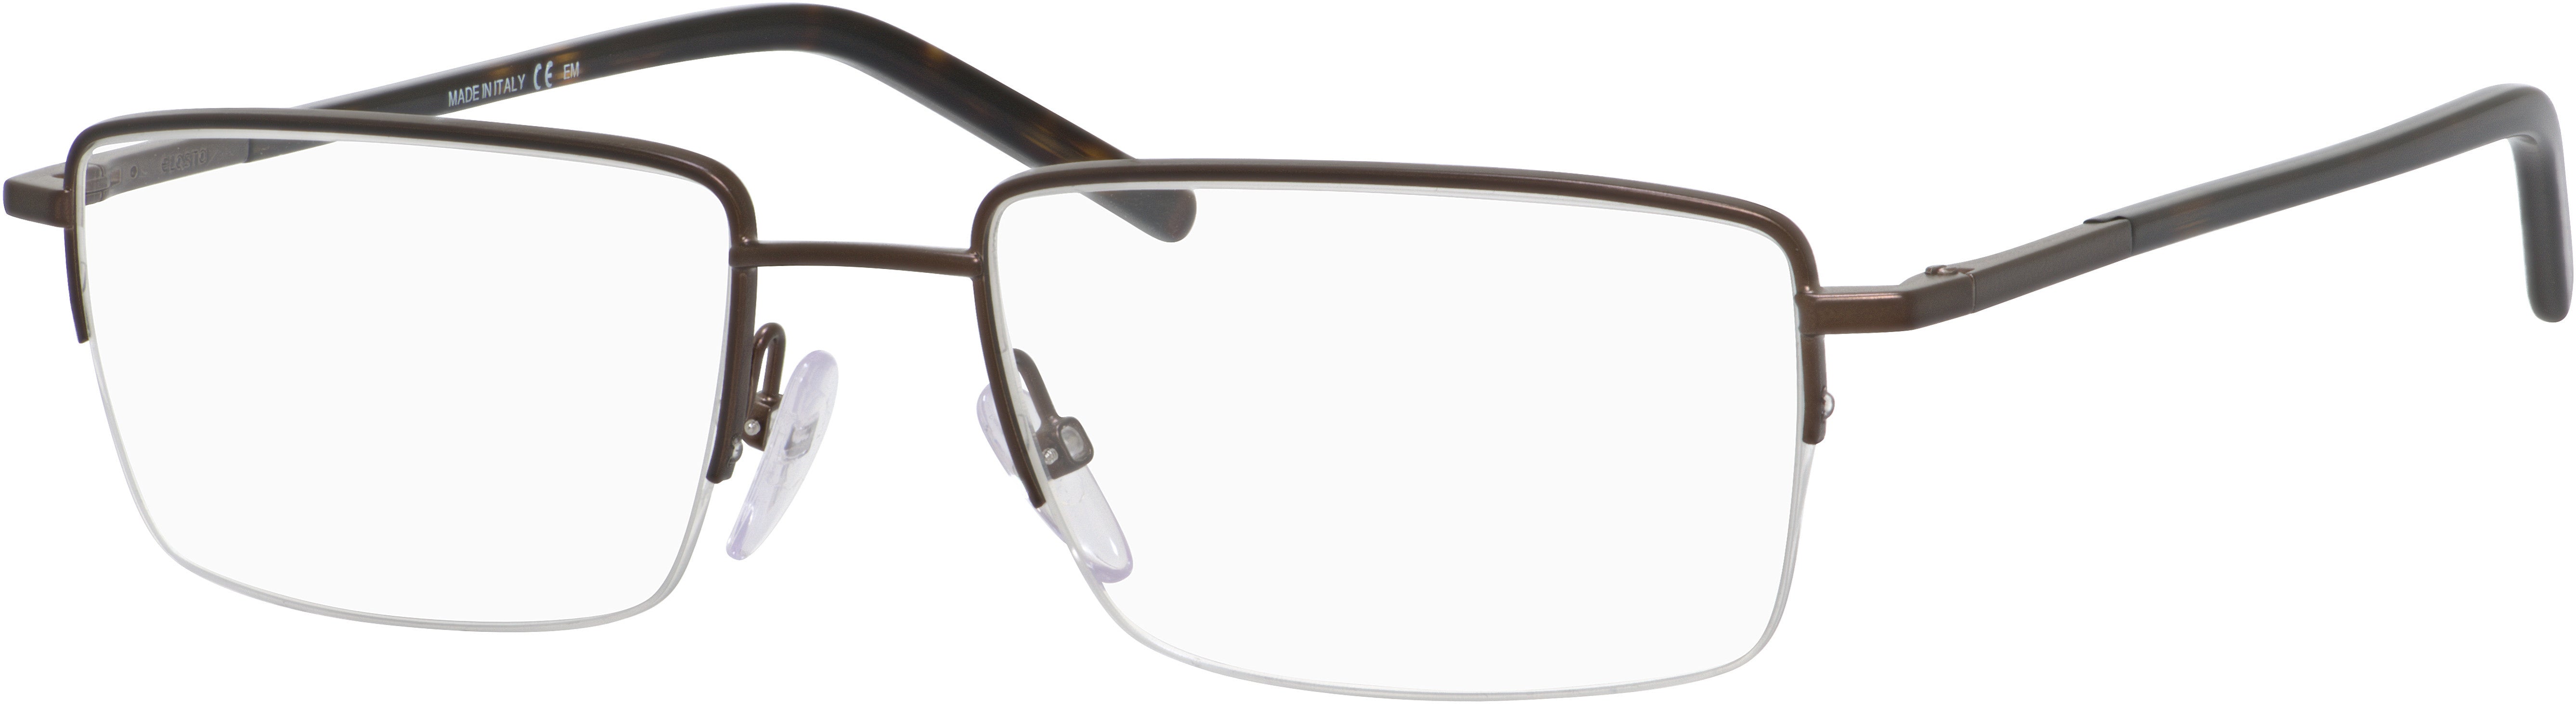  Elasta 7219 Rectangular Eyeglasses 04IN-04IN  Matte Brown (00 Demo Lens)